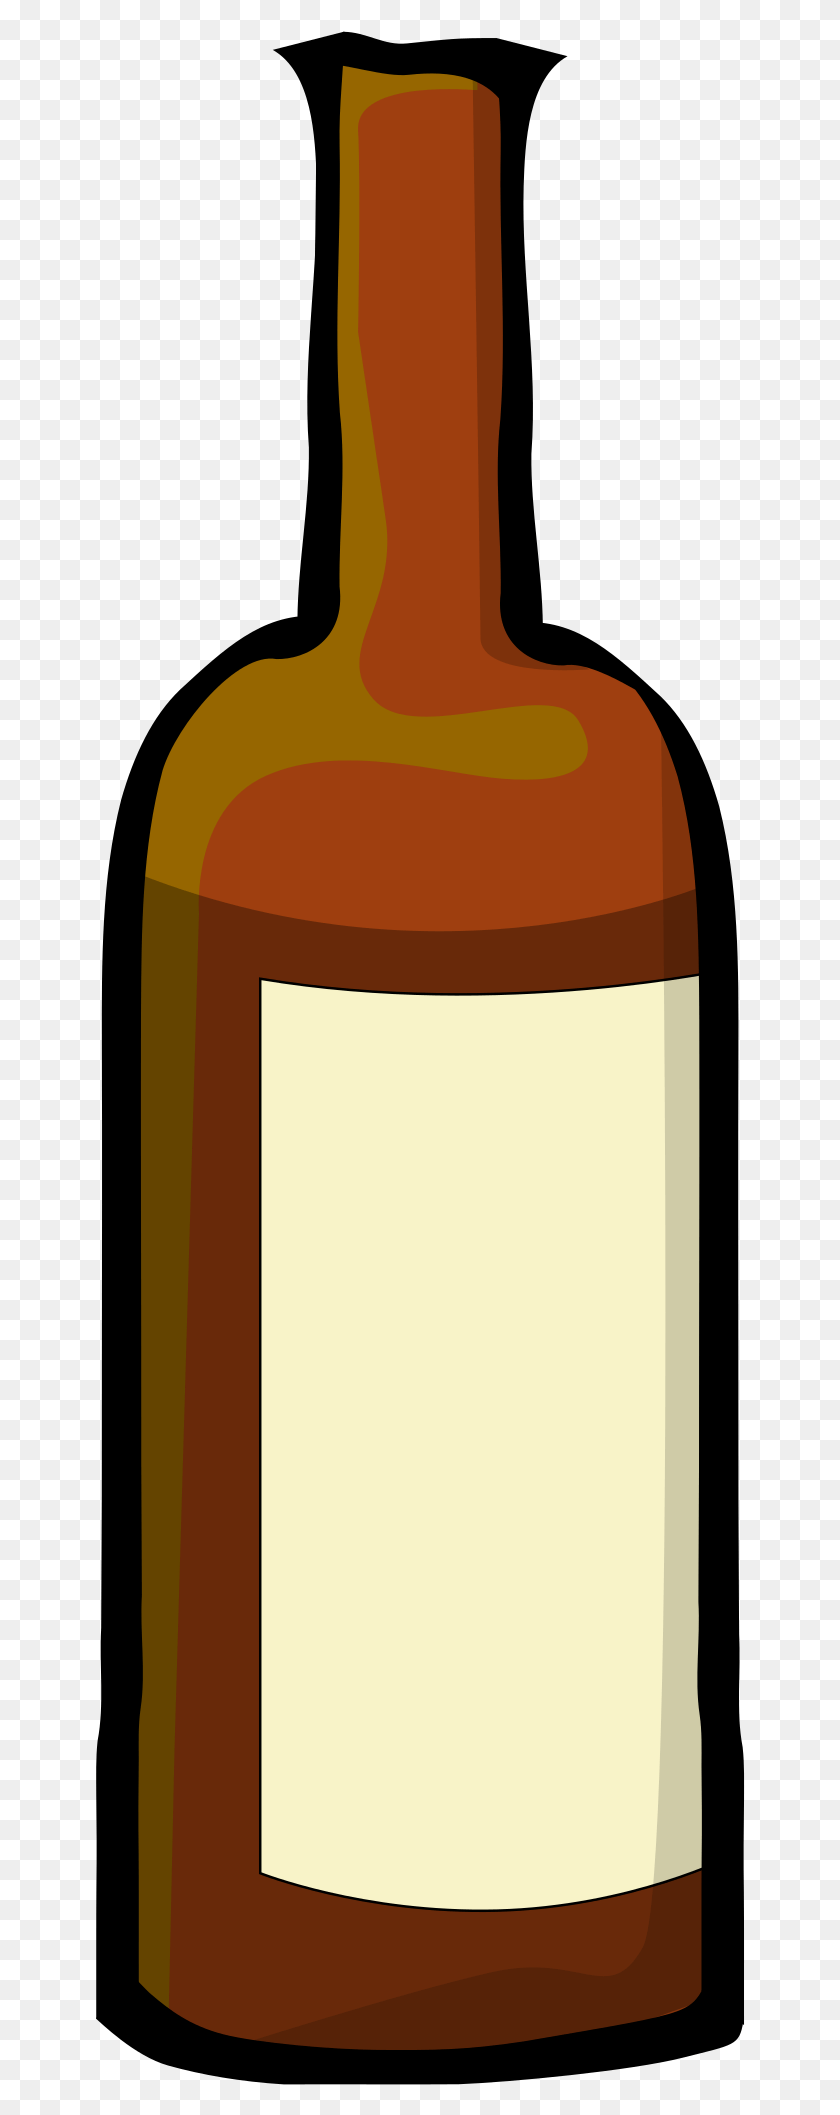 651x2055 Wine Bottle Cartoon Drink Alcohol Bottles Wine Bottle Clip Art, Label, Text, Bottle HD PNG Download